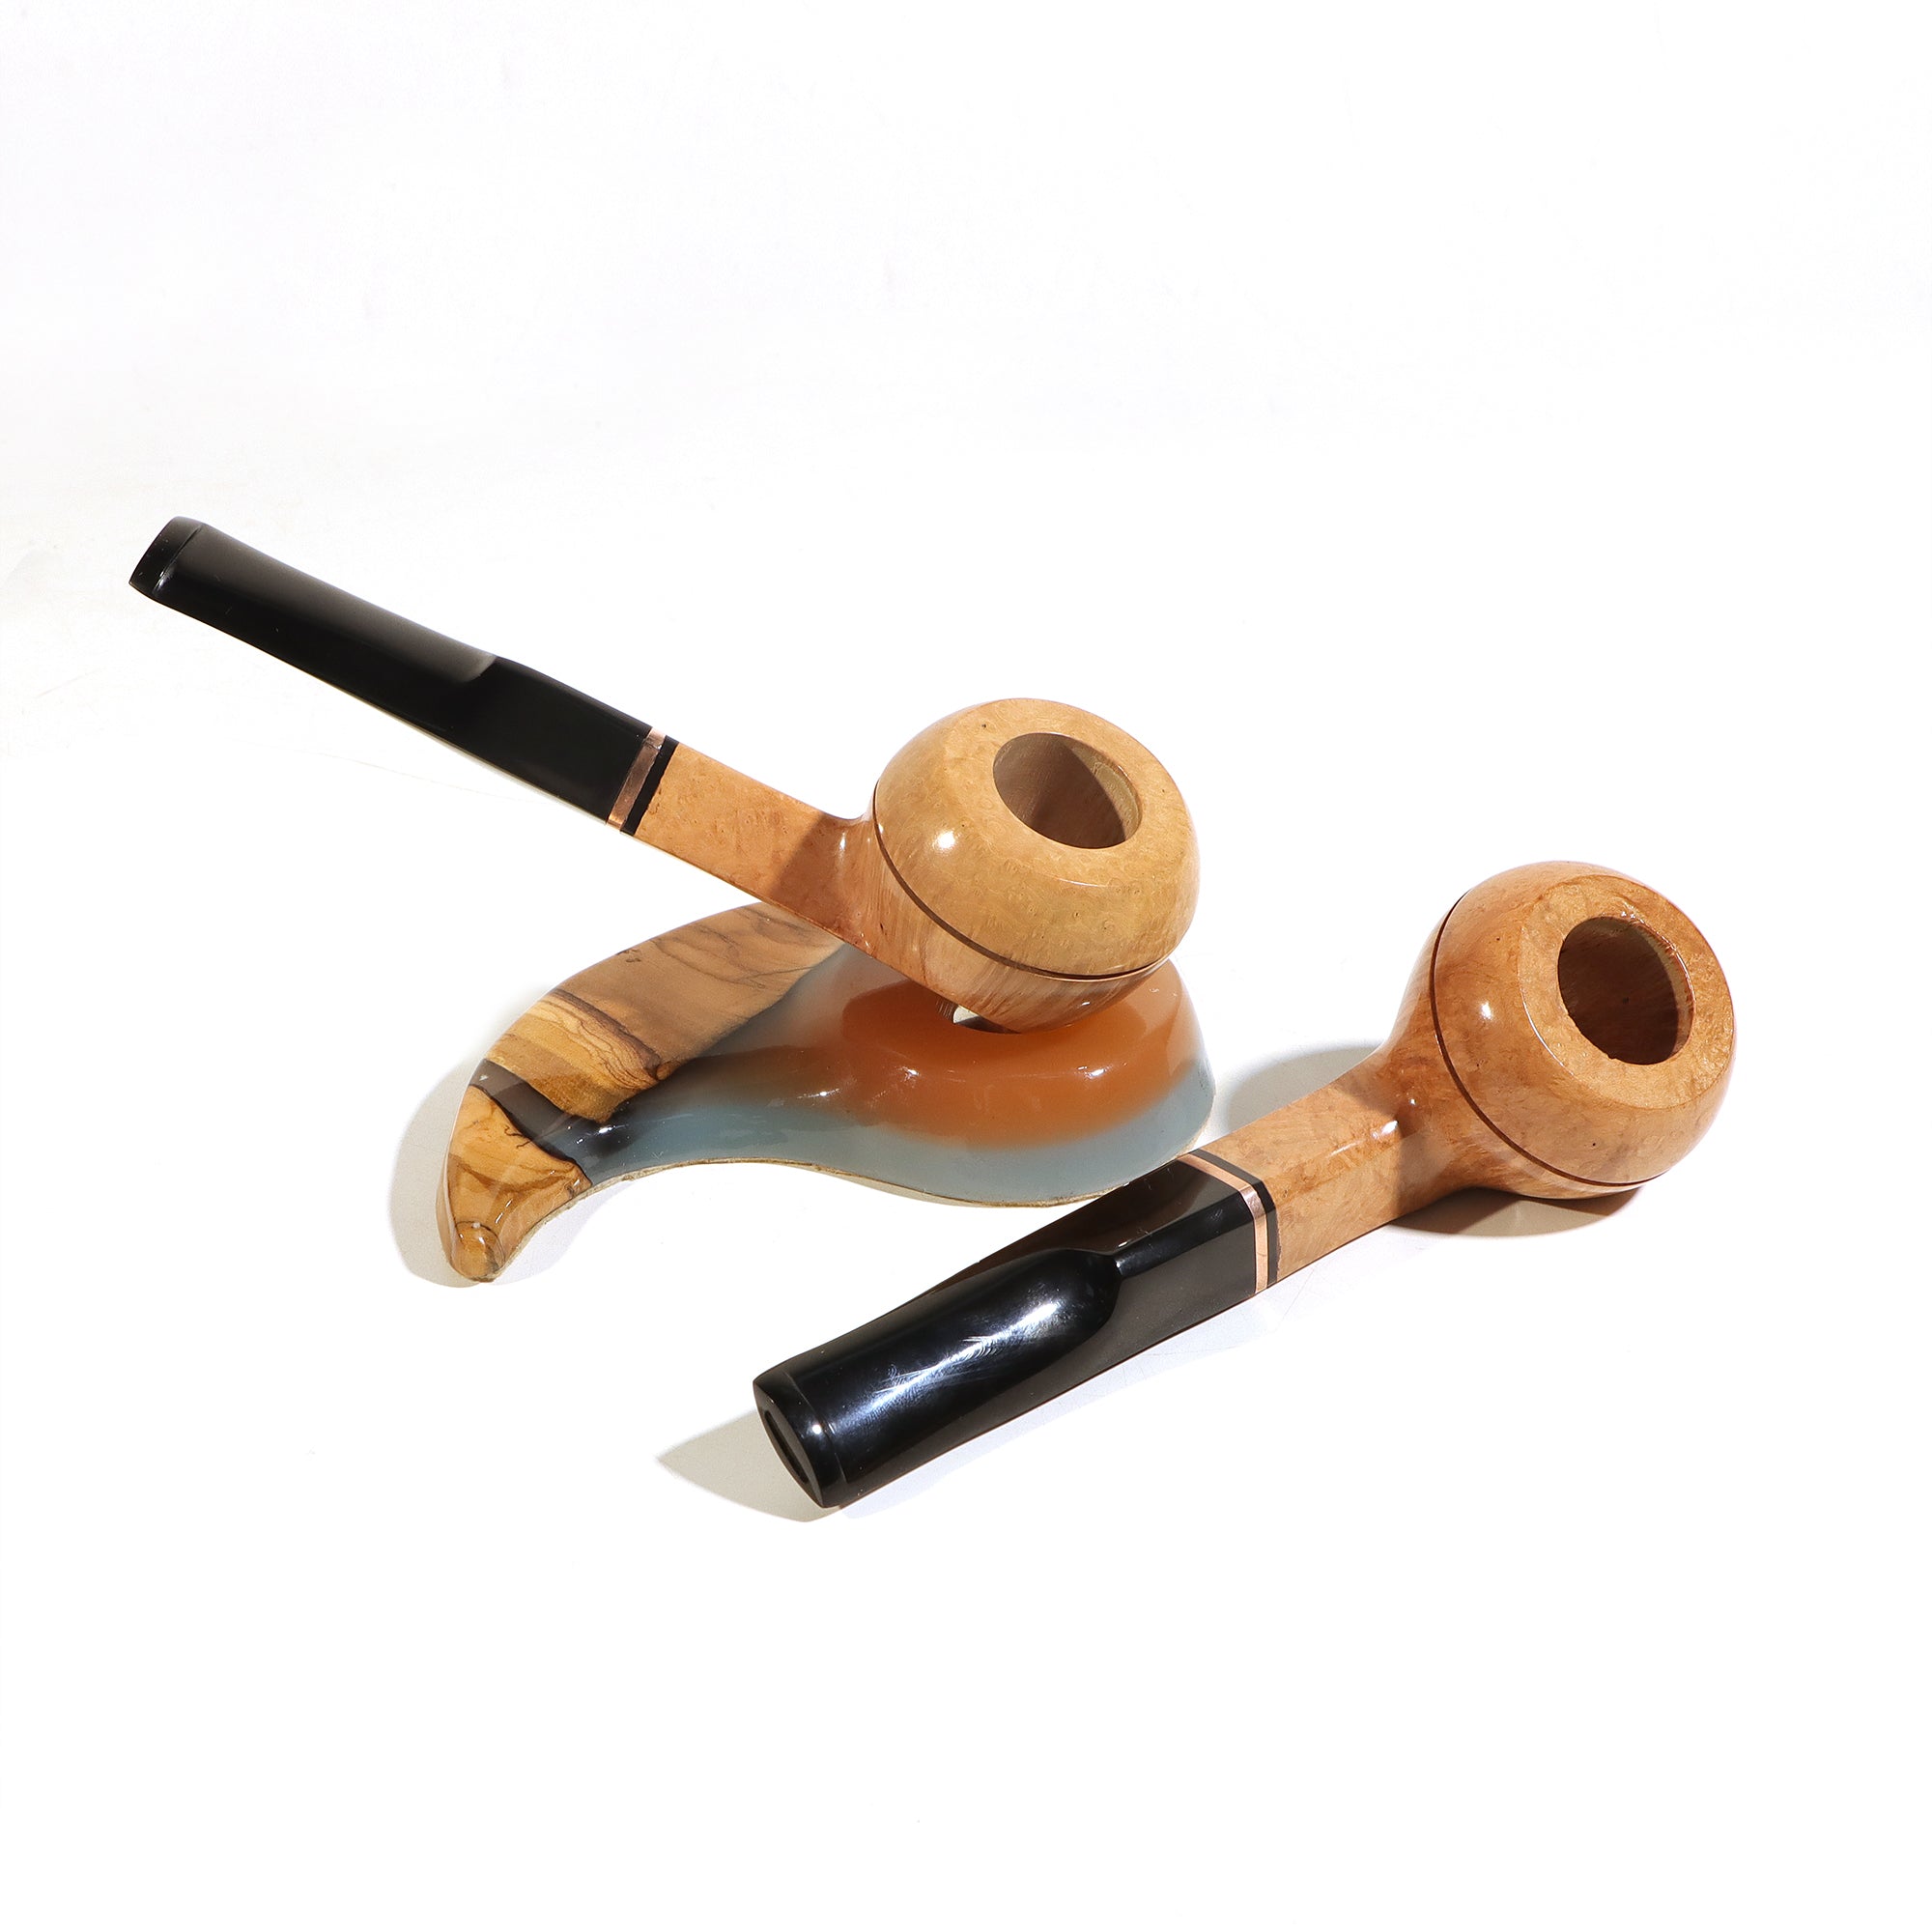 Idea Pipes straight Briar Wood Color Tobacco Pipe Bulldog Shape No Filter With Ebonite Stem